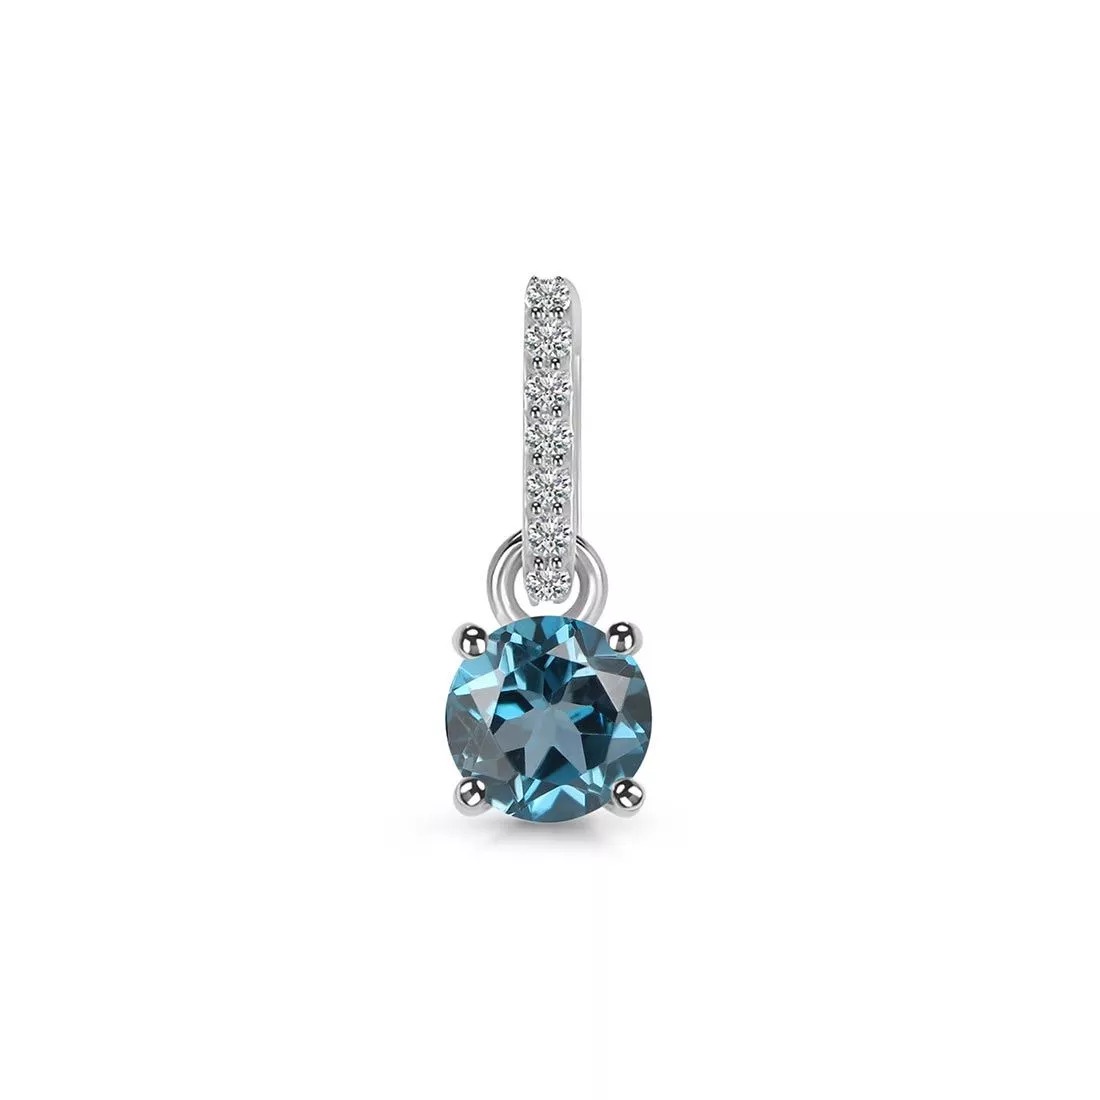 Buy Stunning Silver London Blue Jewelry